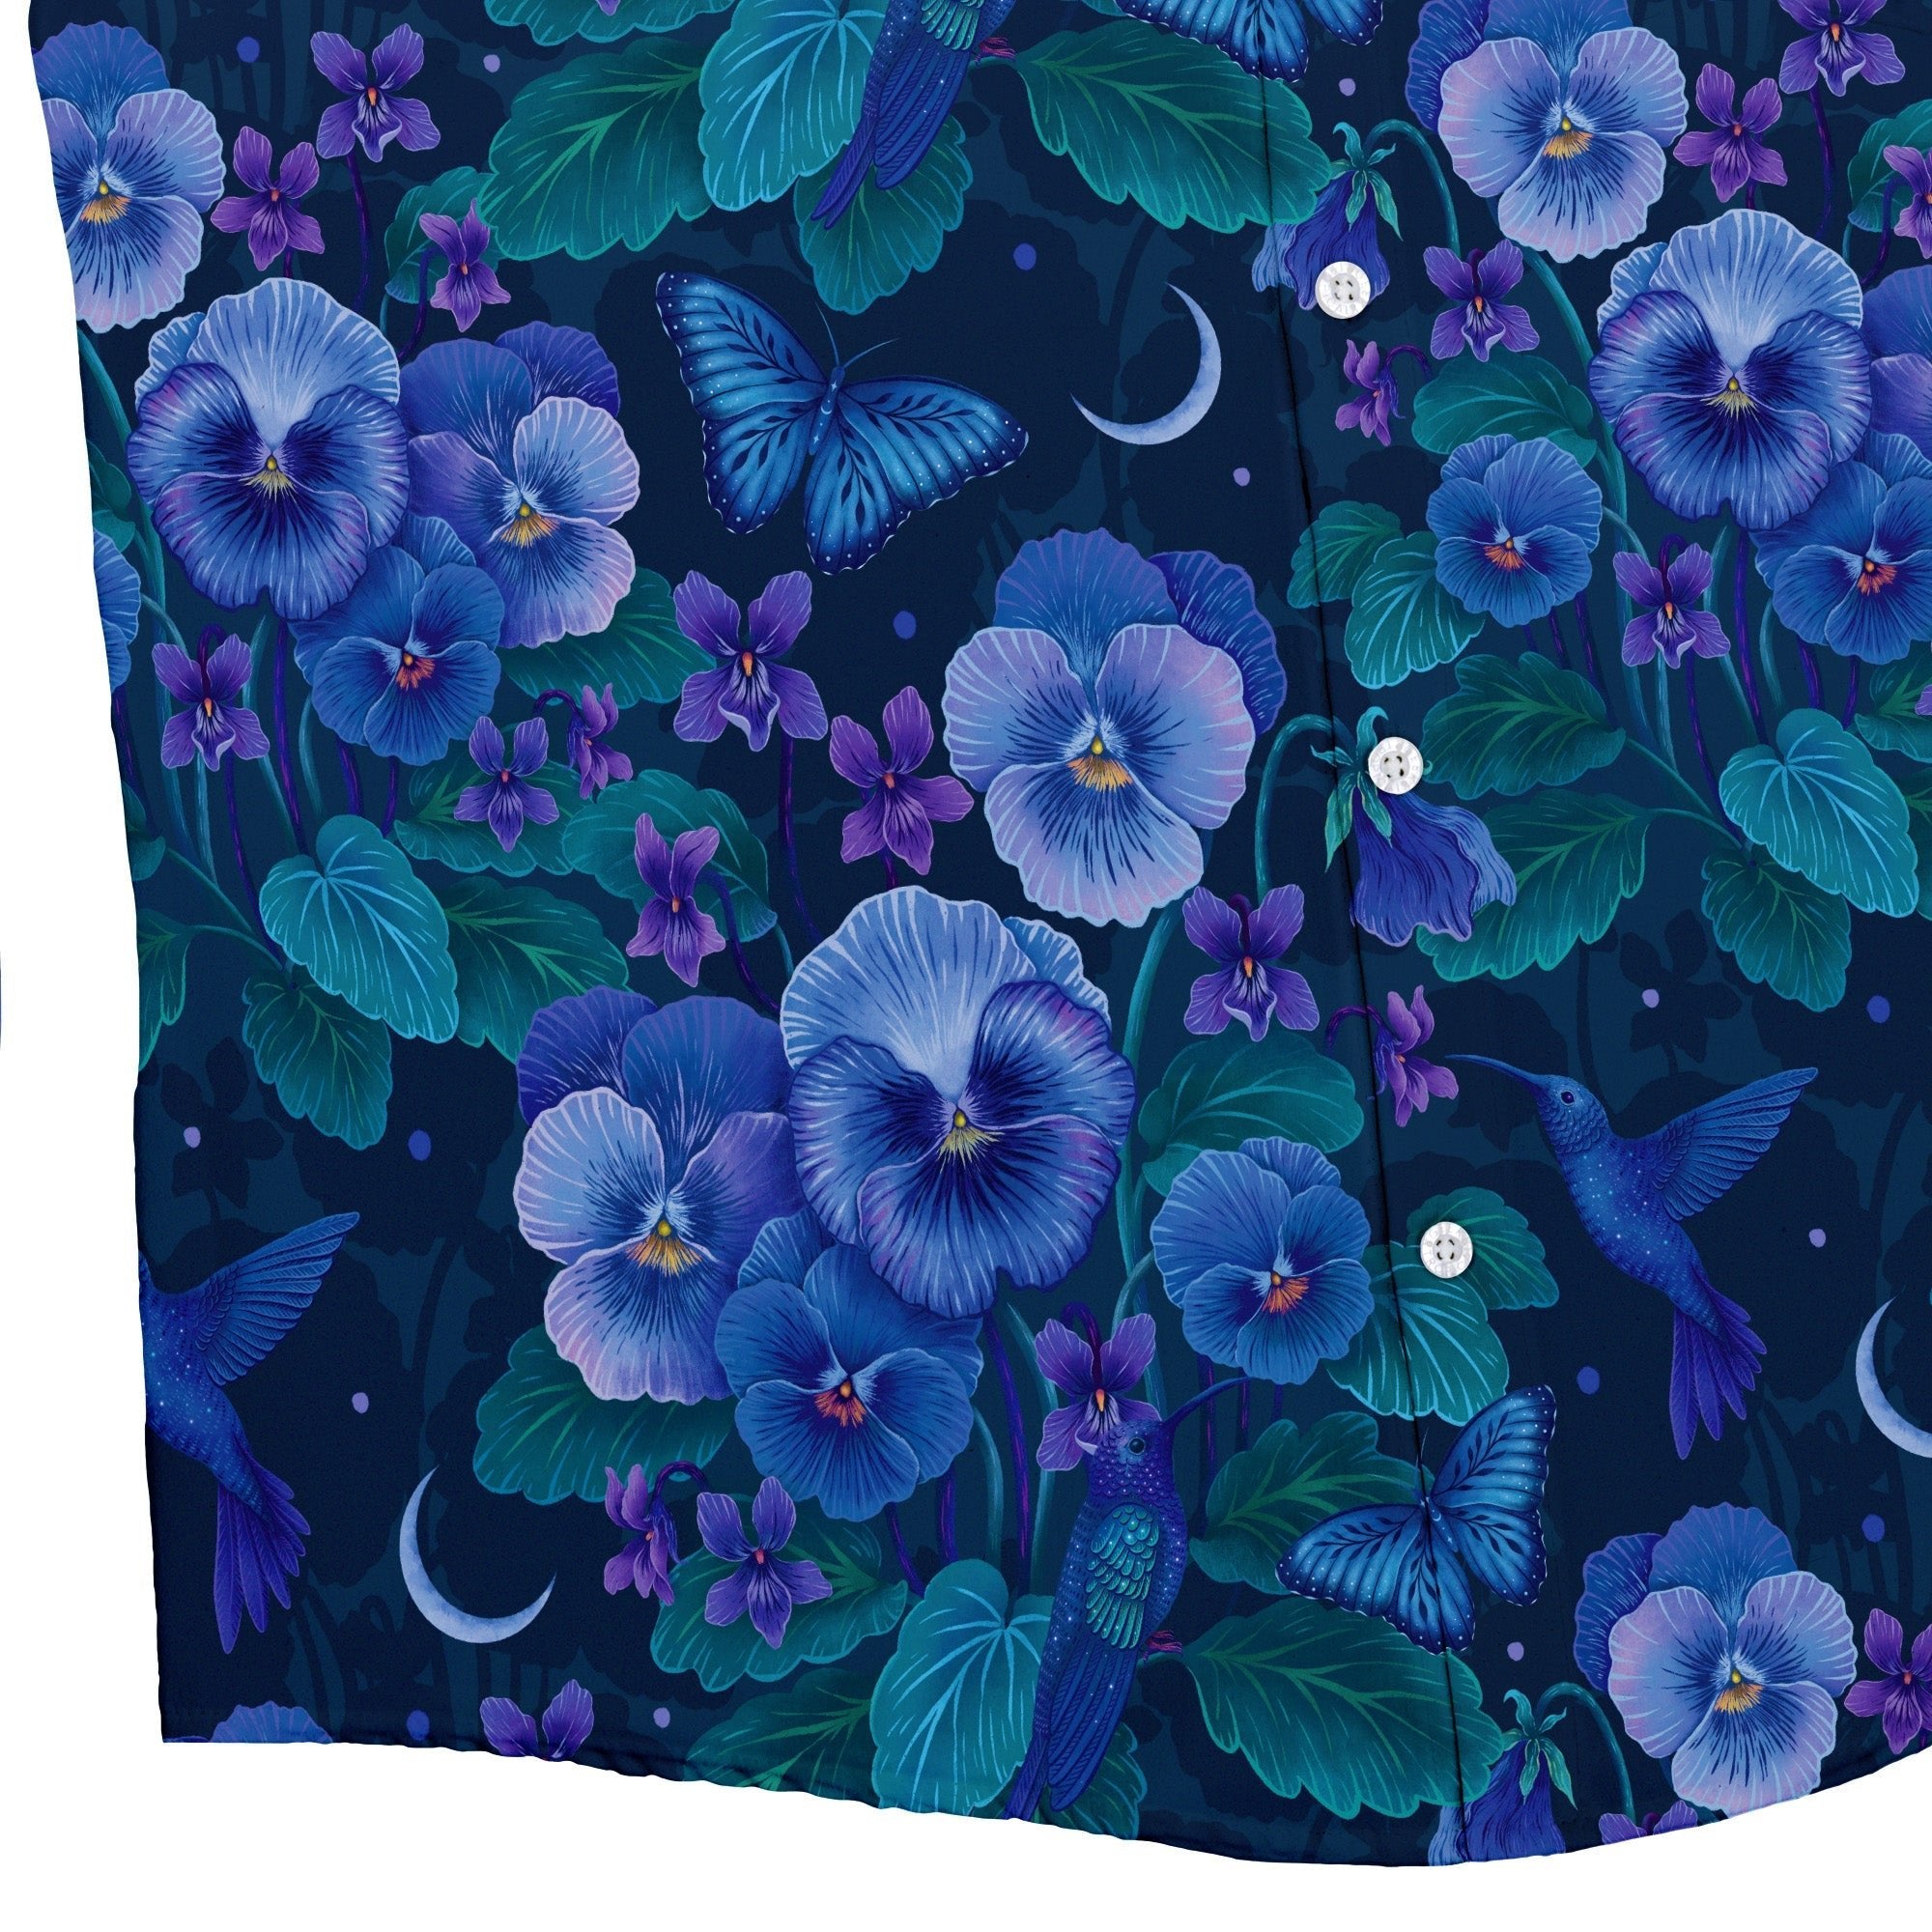 Episodic Violet Purple Night Button Up Shirt - XS - Hawaiian Shirt - No Pocket -